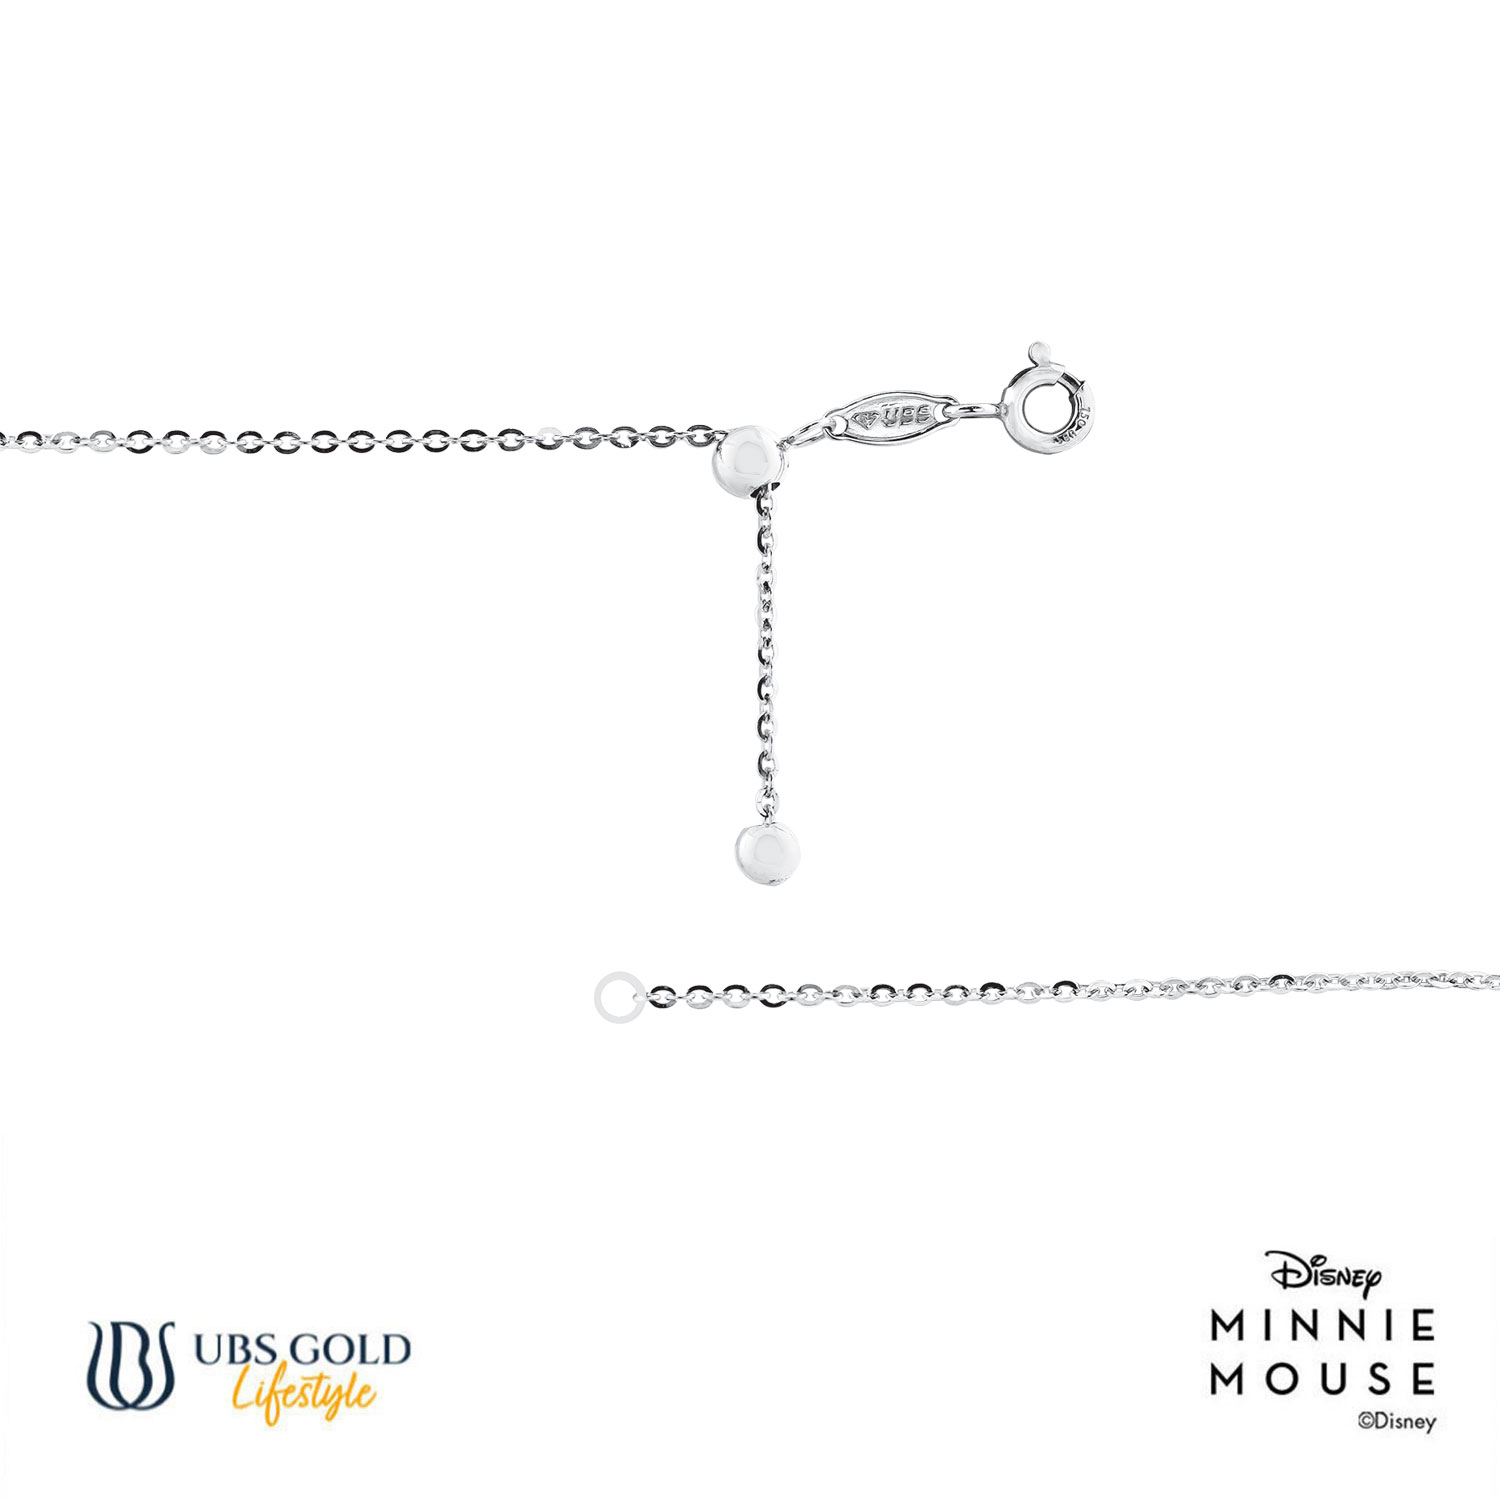 UBS Gold Gelang Emas Disney Minnie Mouse - Kgy0076 - 17K